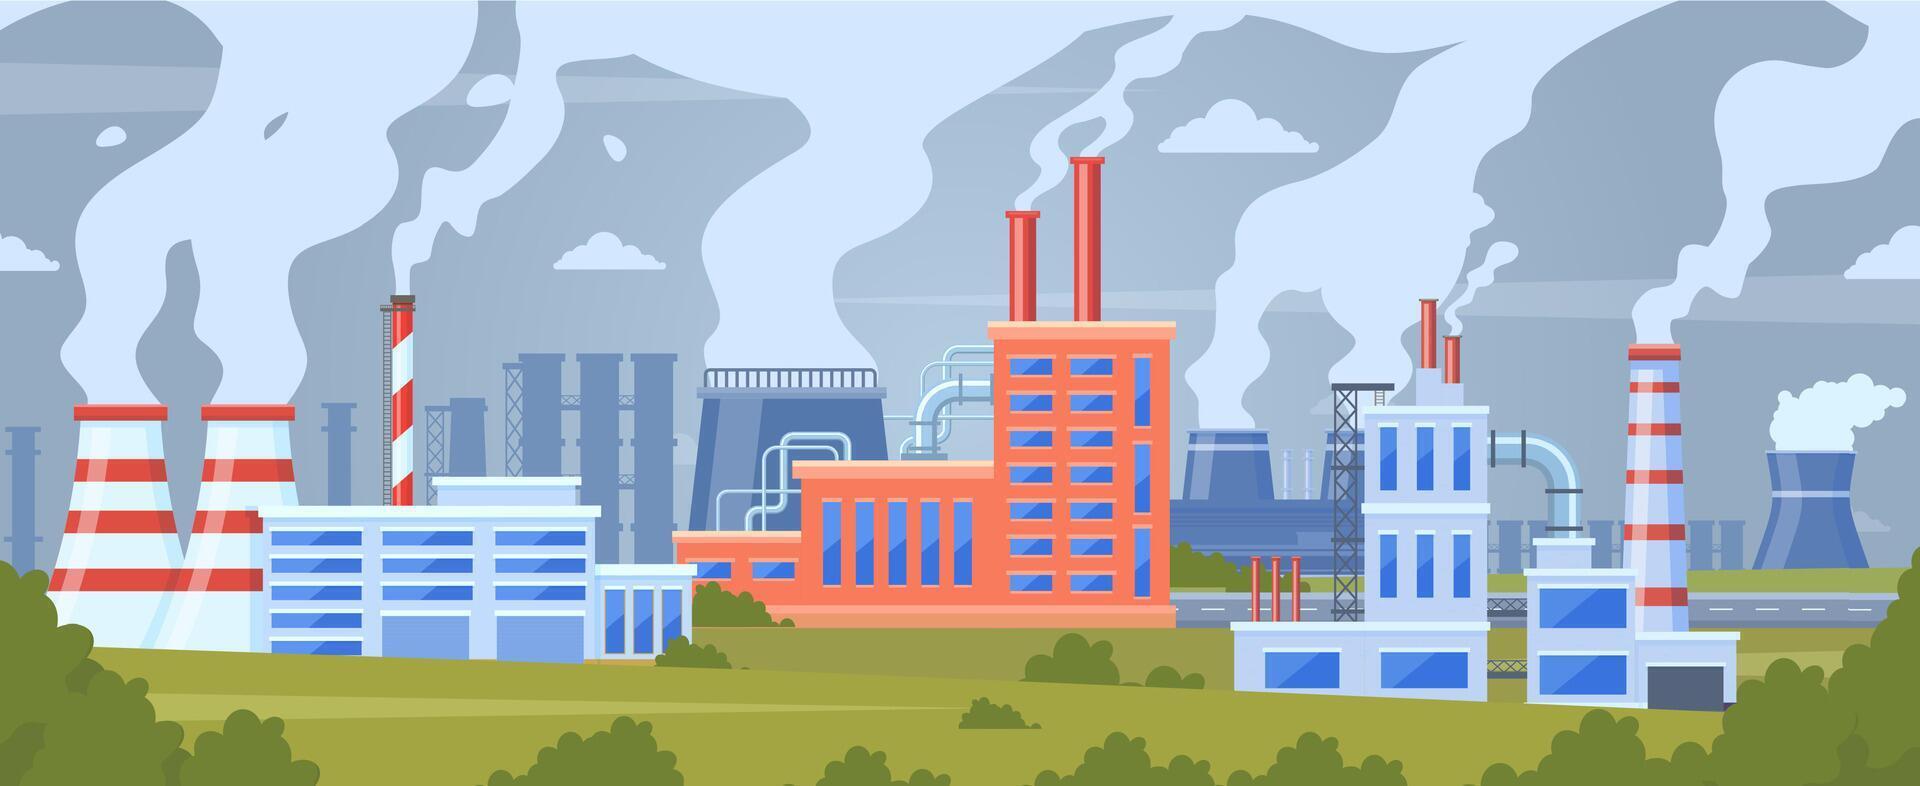 fábrica ar poluição. industrial smog poluição, poluído urbano paisagem, chaminé tubo fábrica tóxico fumaça nuvens vetor ilustração